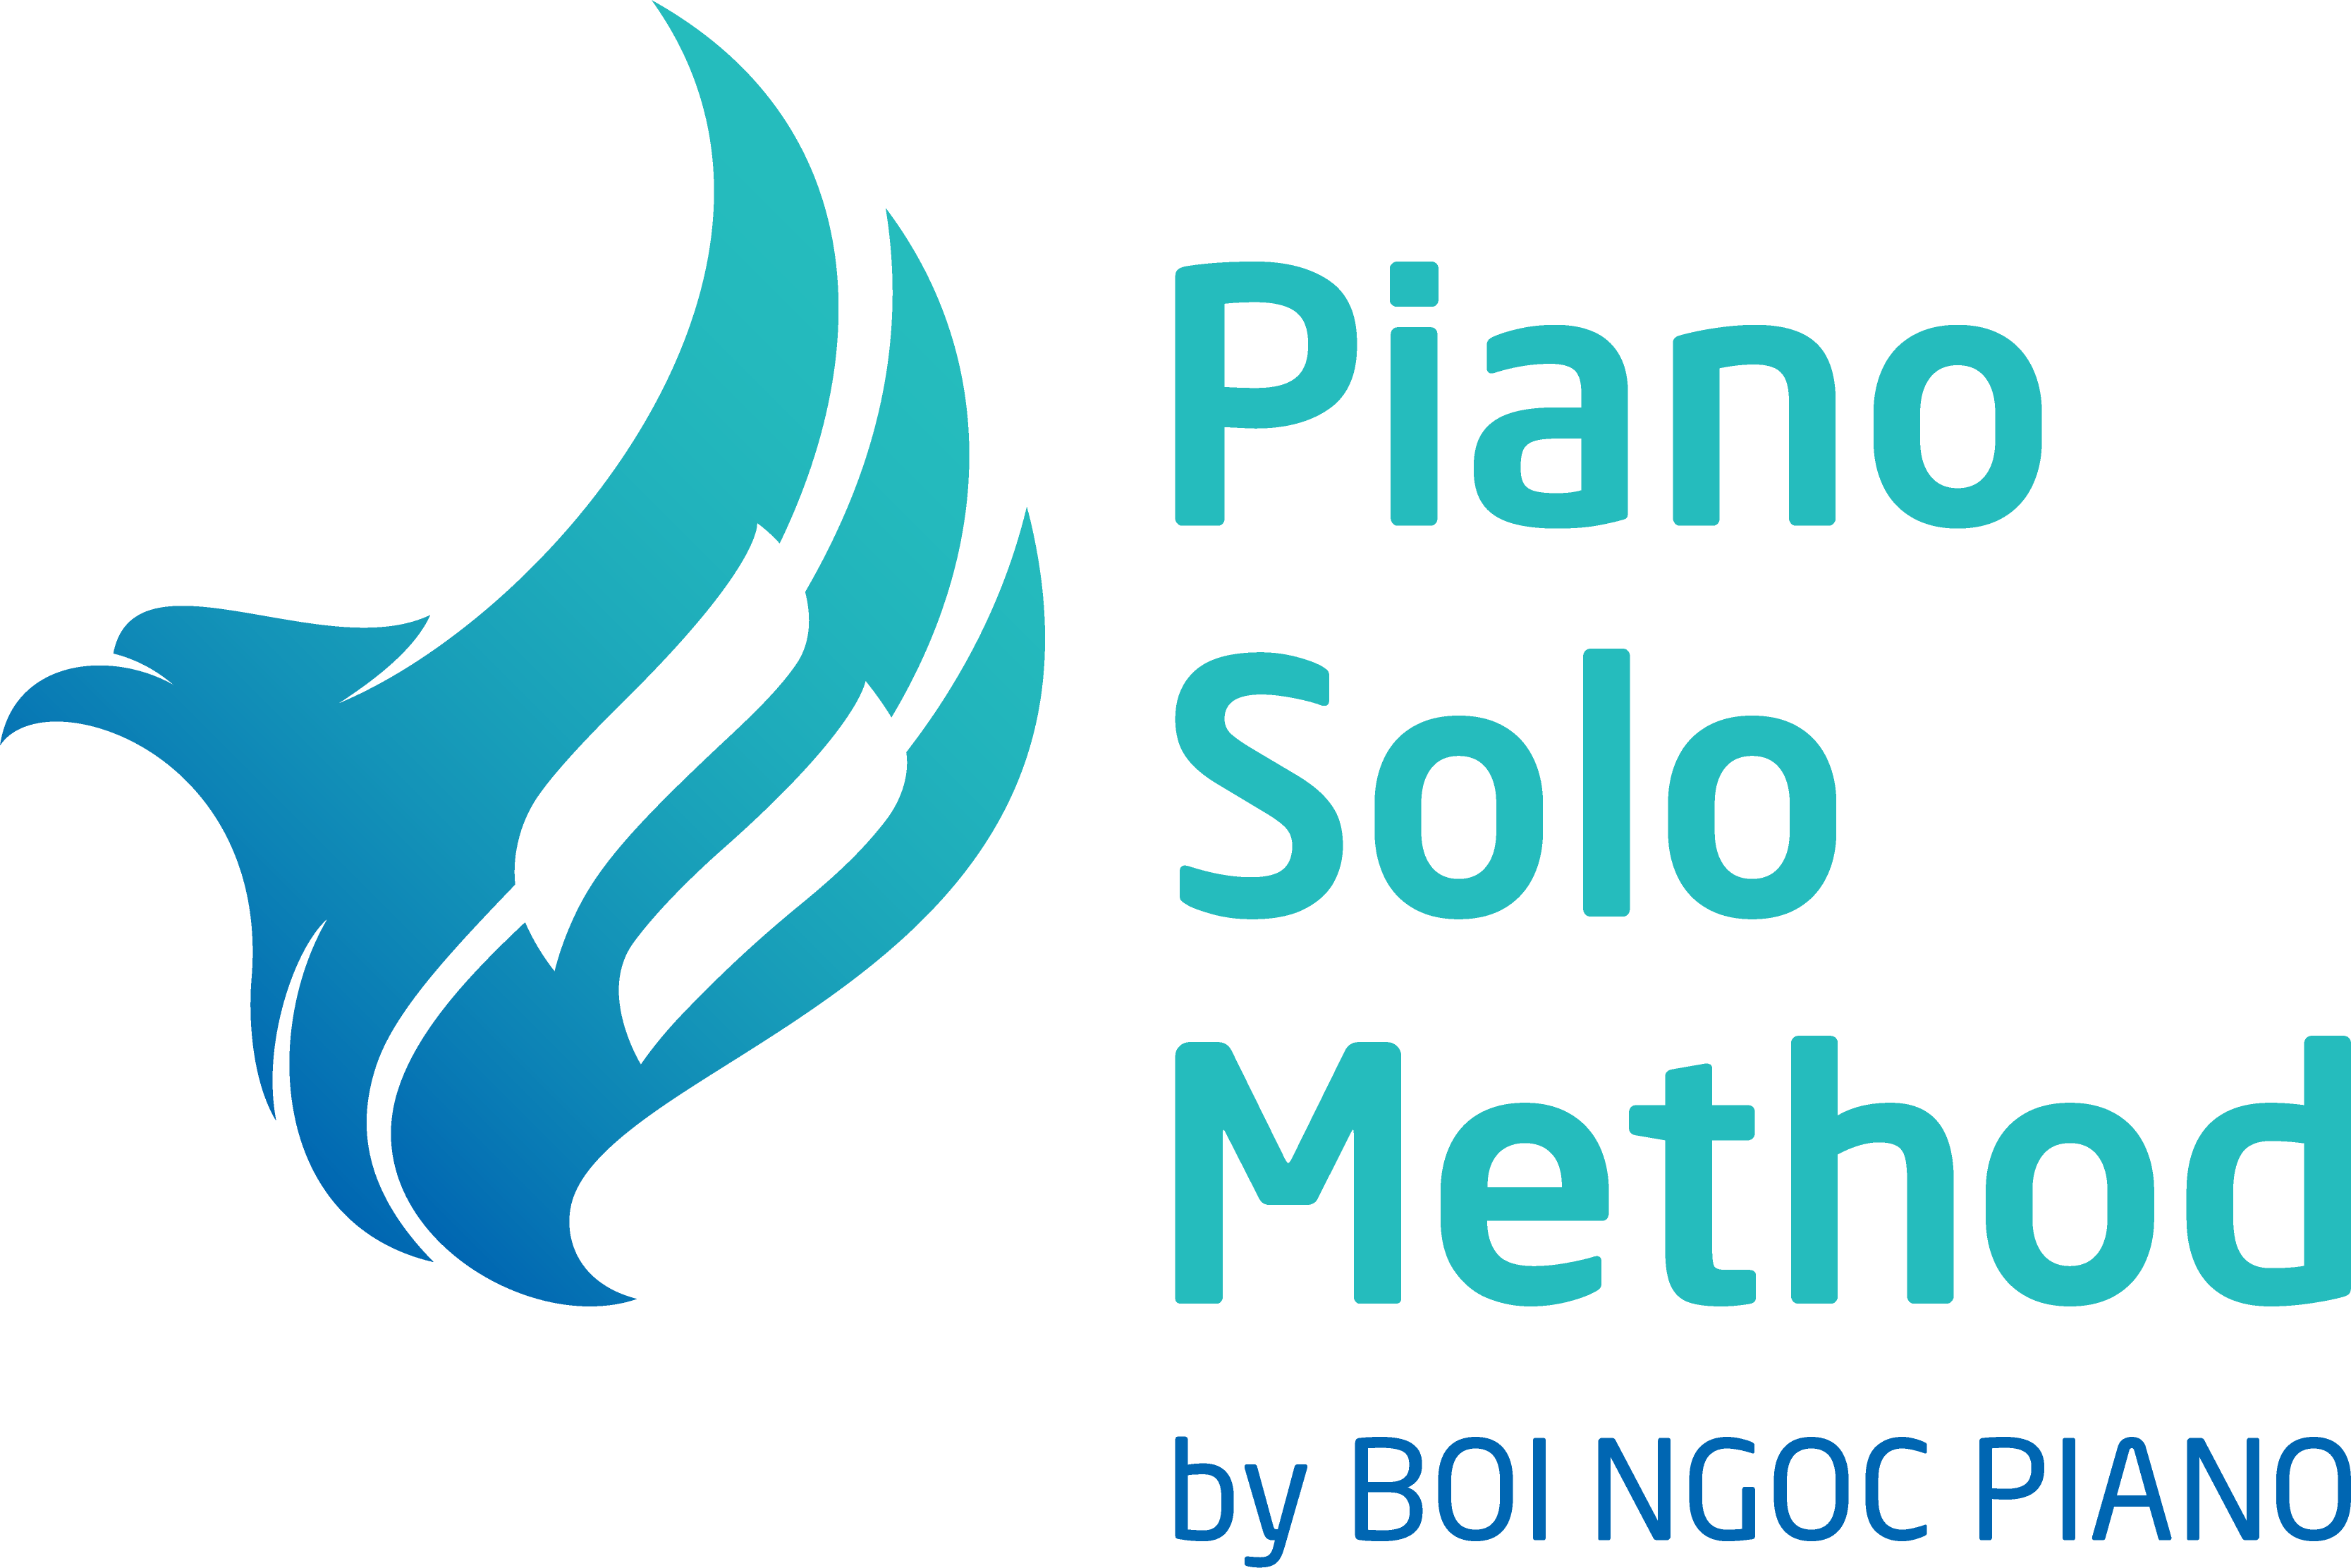 Piano Solo Method